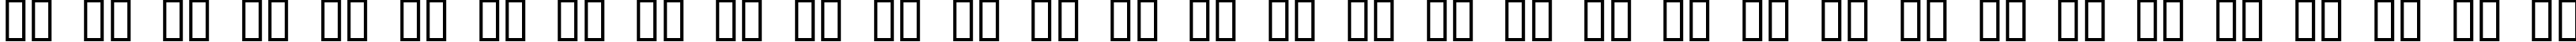 Пример написания русского алфавита шрифтом dingies Heavy